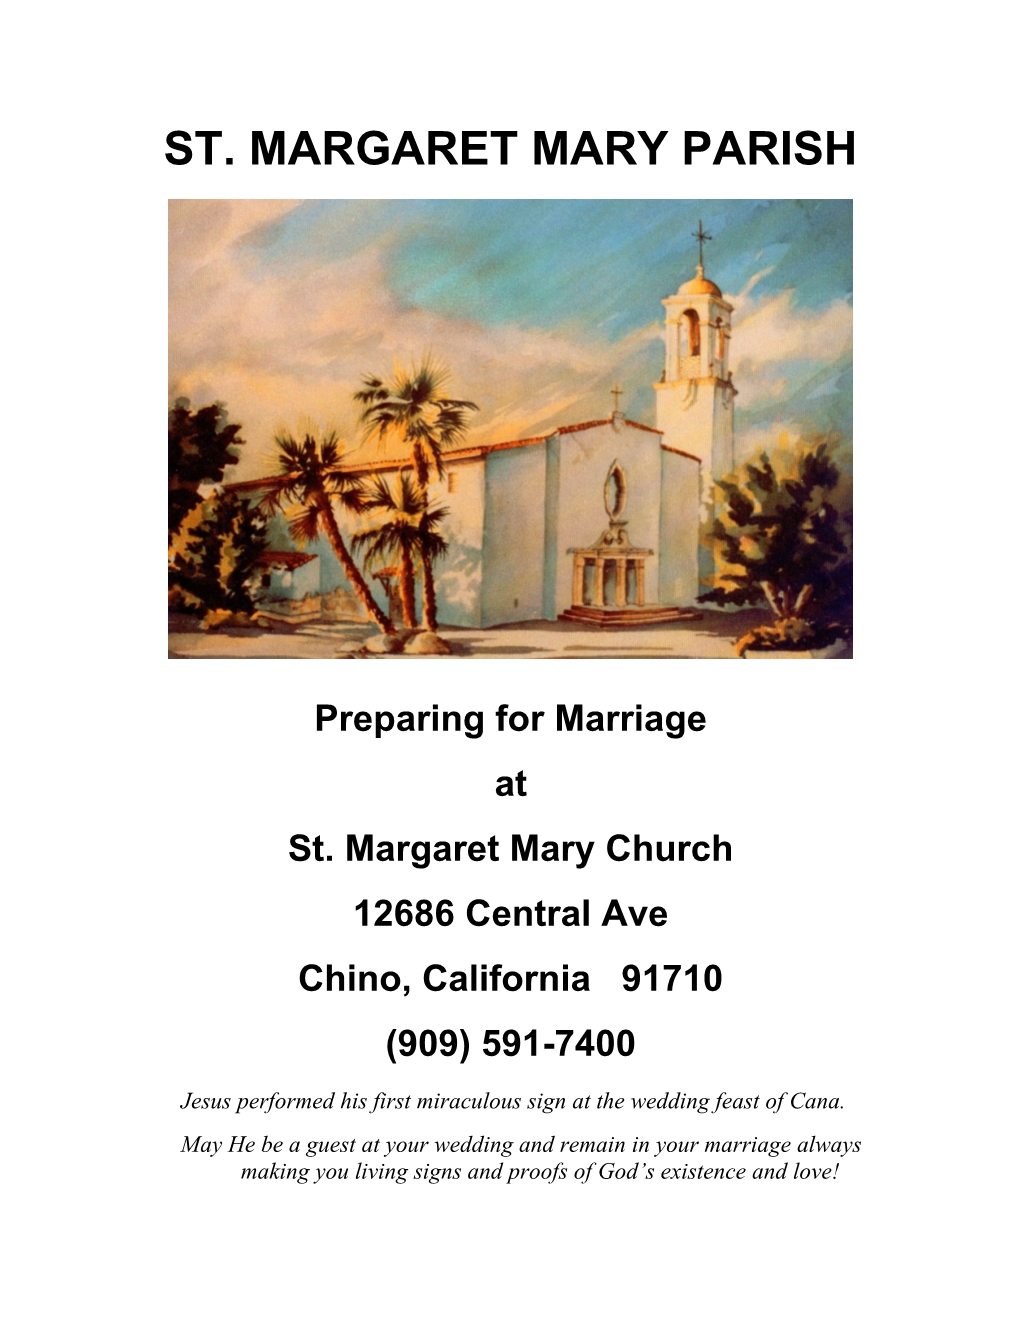 St. Margaret Mary Parish